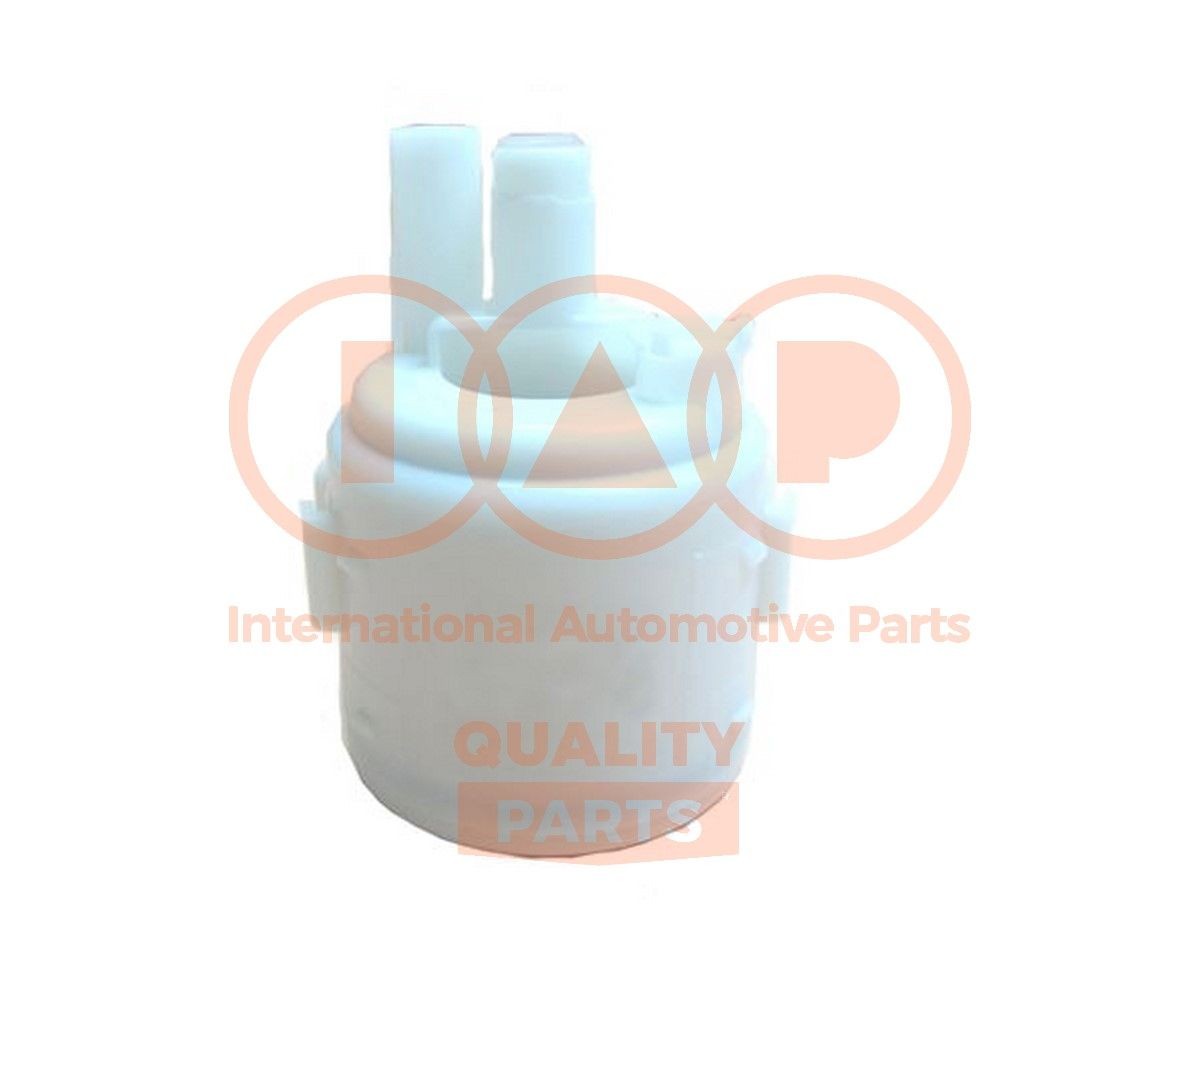 Fuel filter IAP QUALITY PARTS Filter Insert - 122-13086